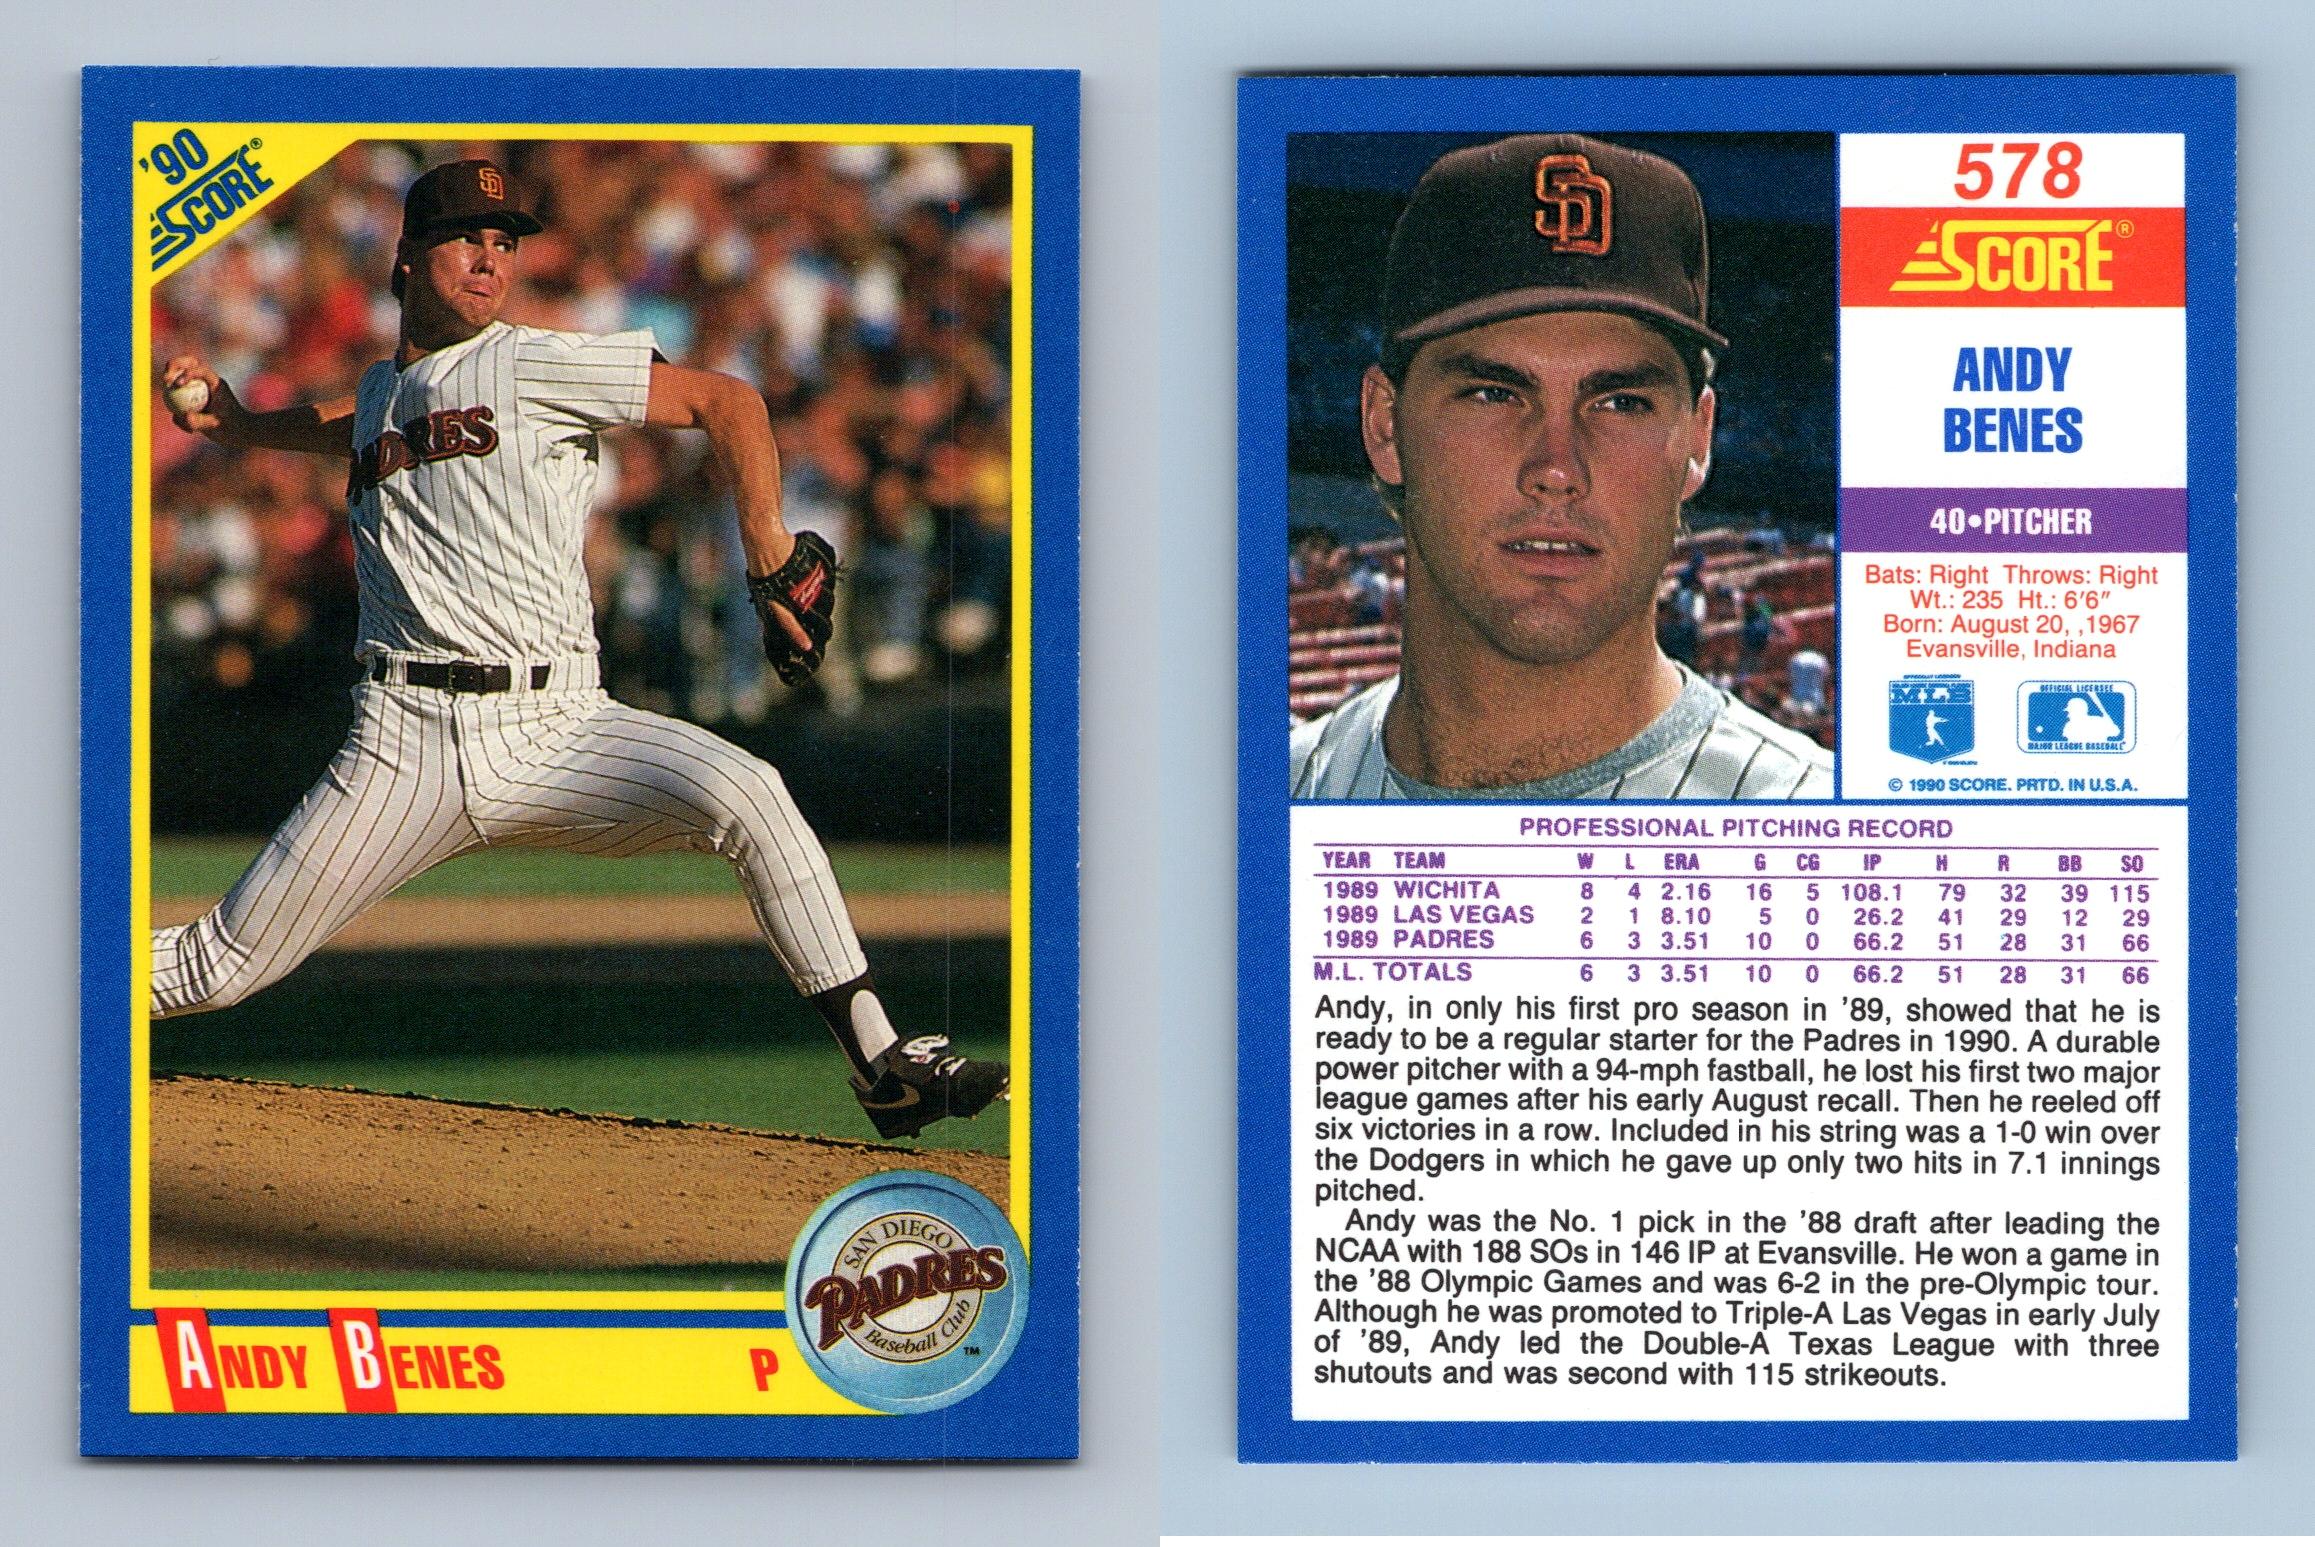 Greg Vaughn - Brewers #585 Score 1990 Baseball RC Trading Card